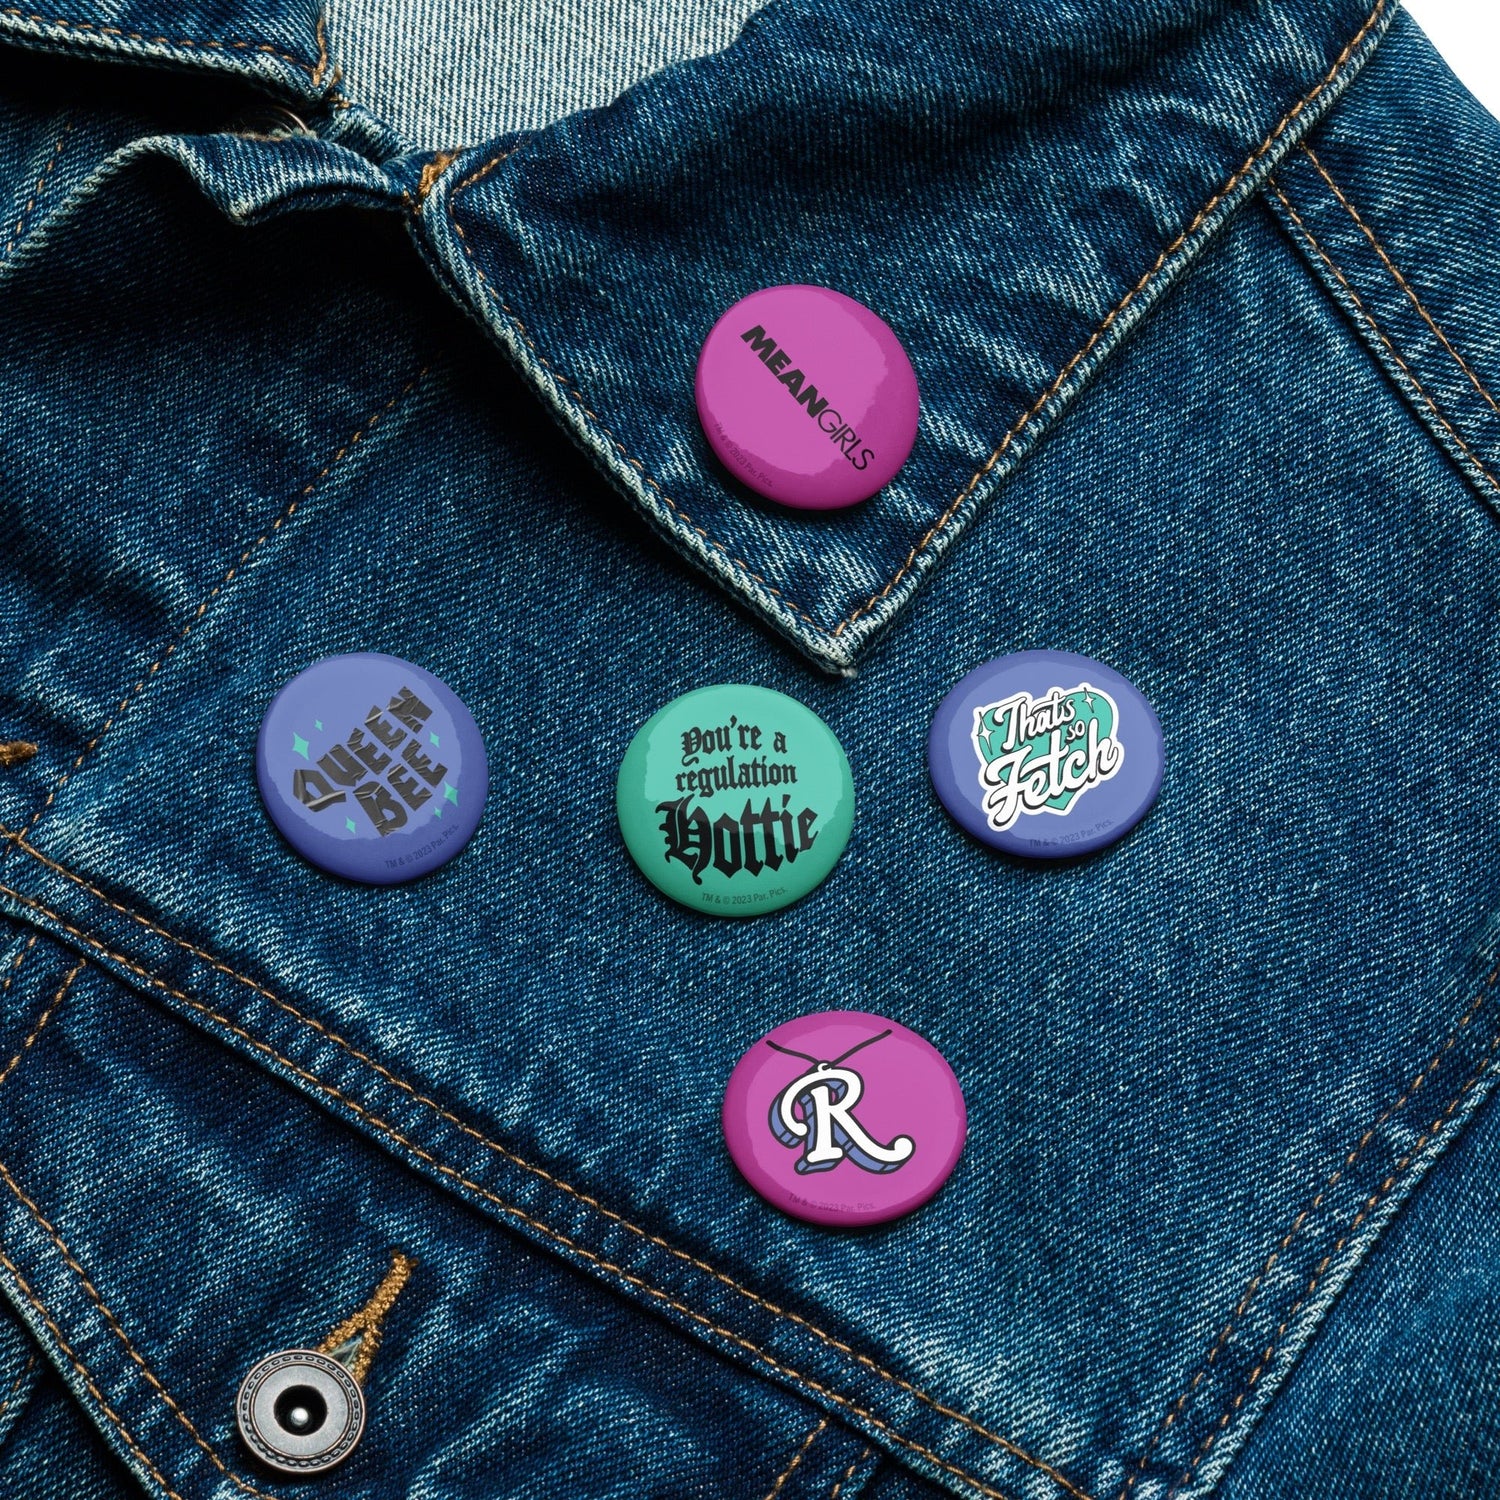 Mean Girls Day Pin Button Set - Paramount Shop